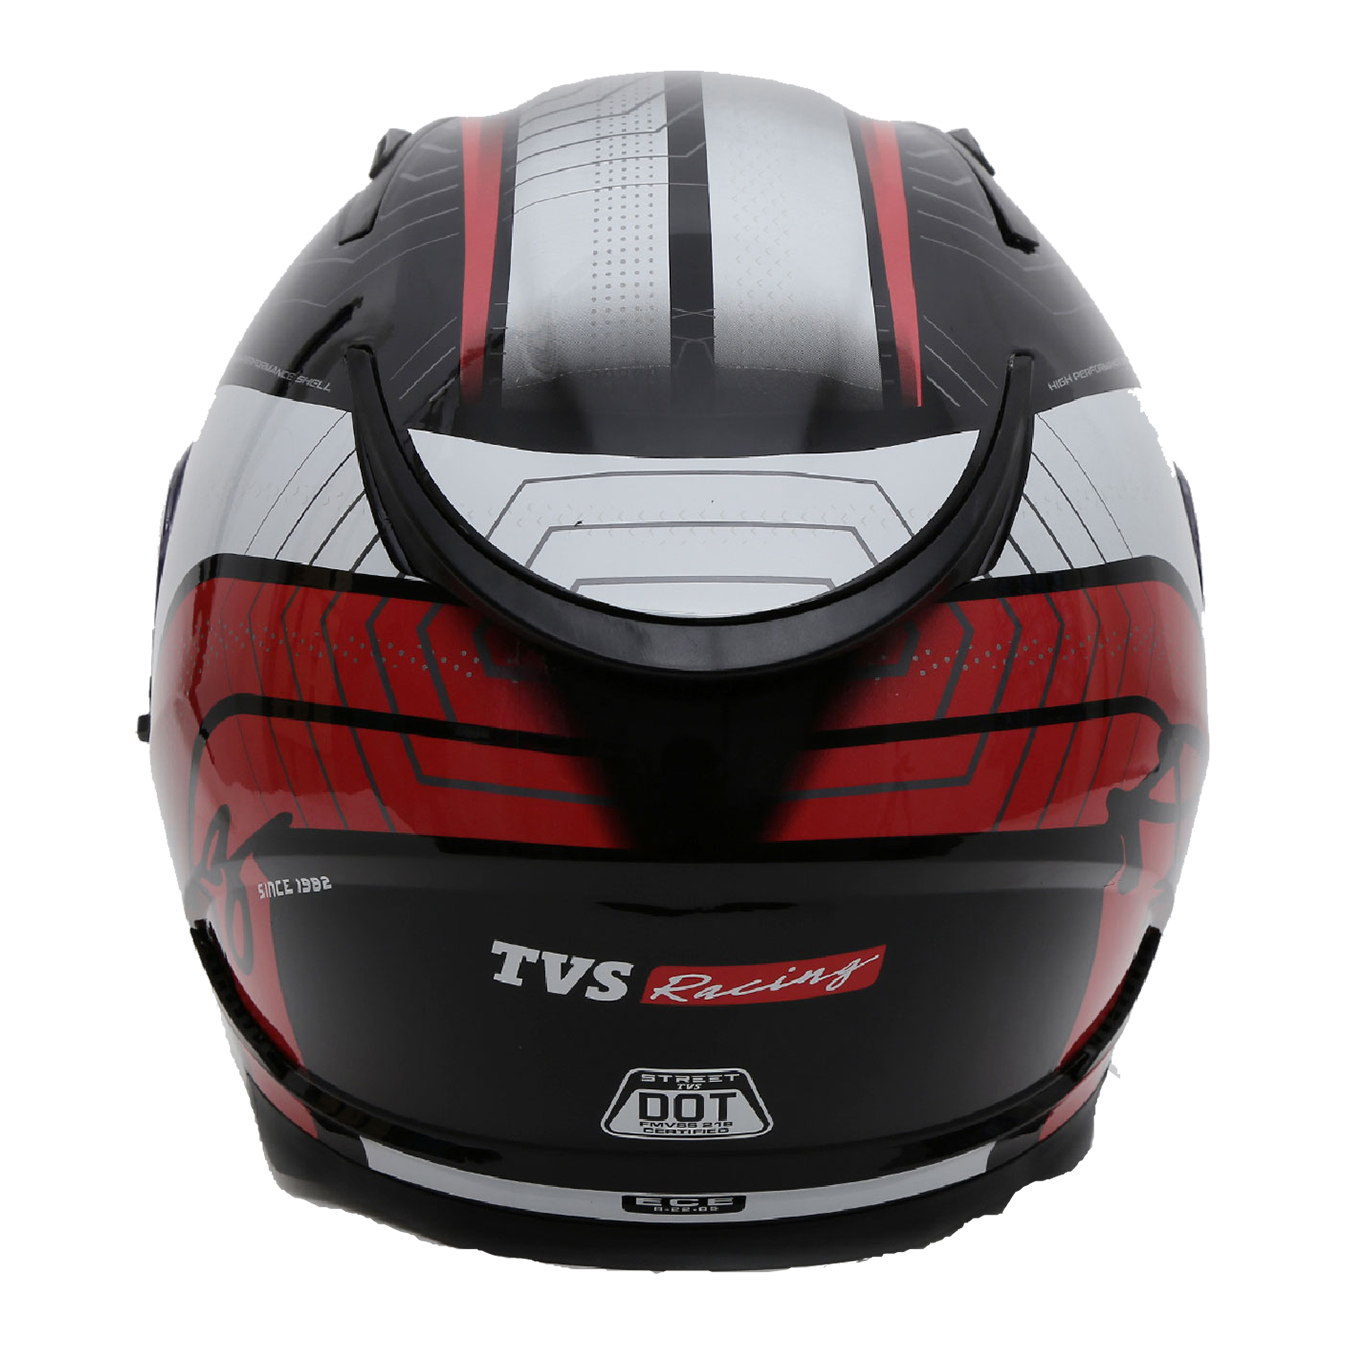  TVS Racing Helmet for Men – Anti-Fog Pin-Lock, Aerodynamic Design & DOT/ISI/ECE Certified – Premium Bike Helmet with Secure Fastening (Red & White)